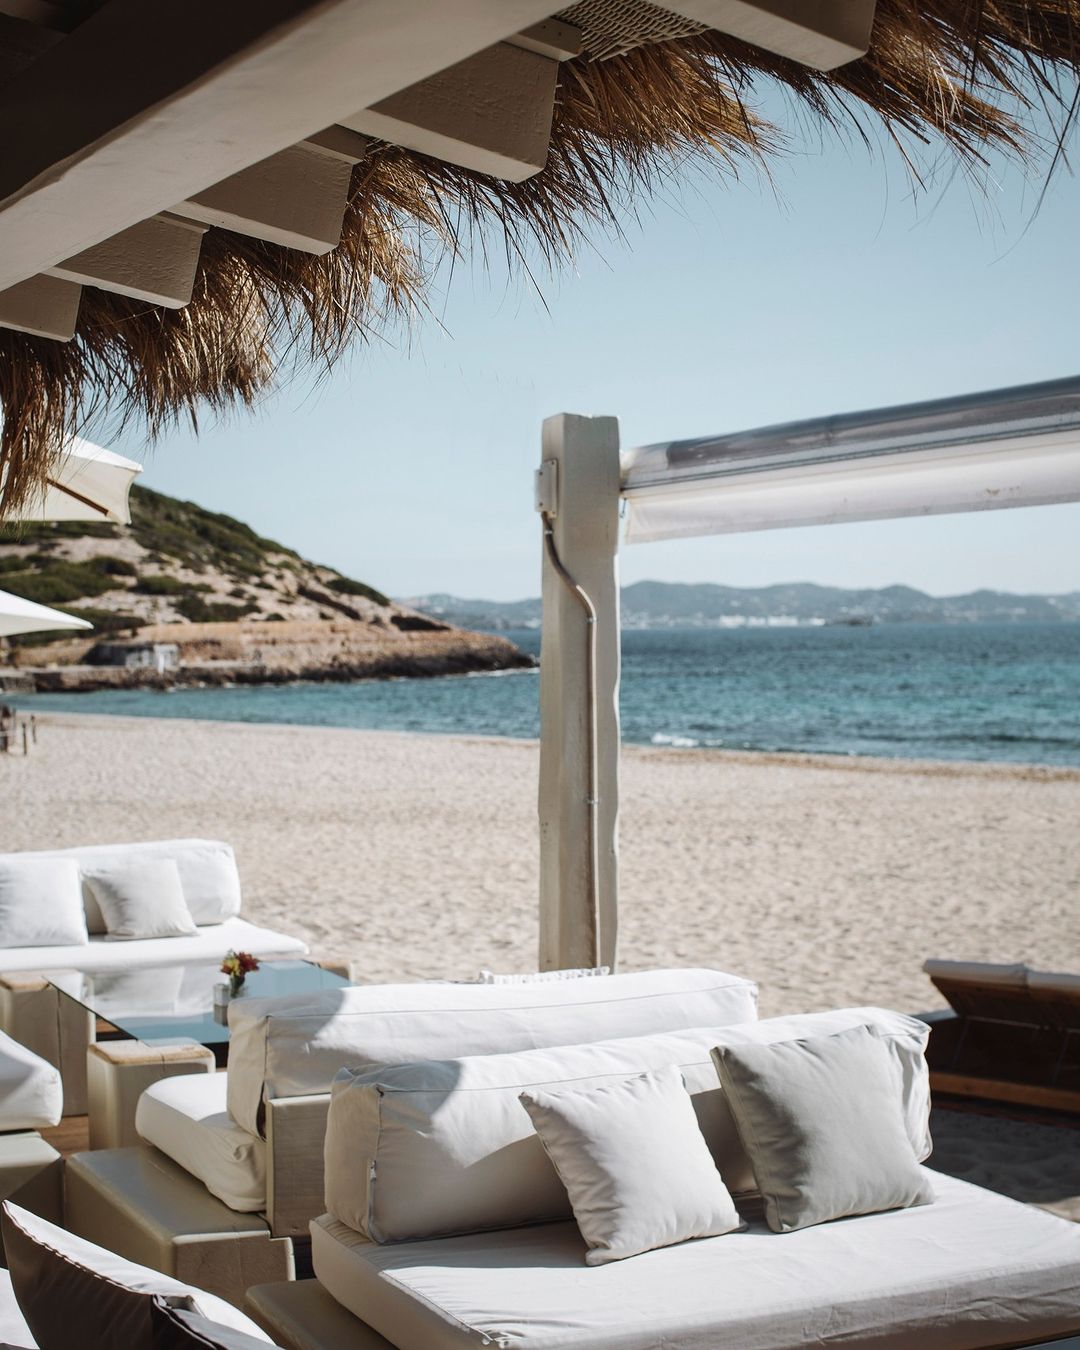 Dreamy beach days - Relax, refresh, repeat at Chiringuito Ibiza